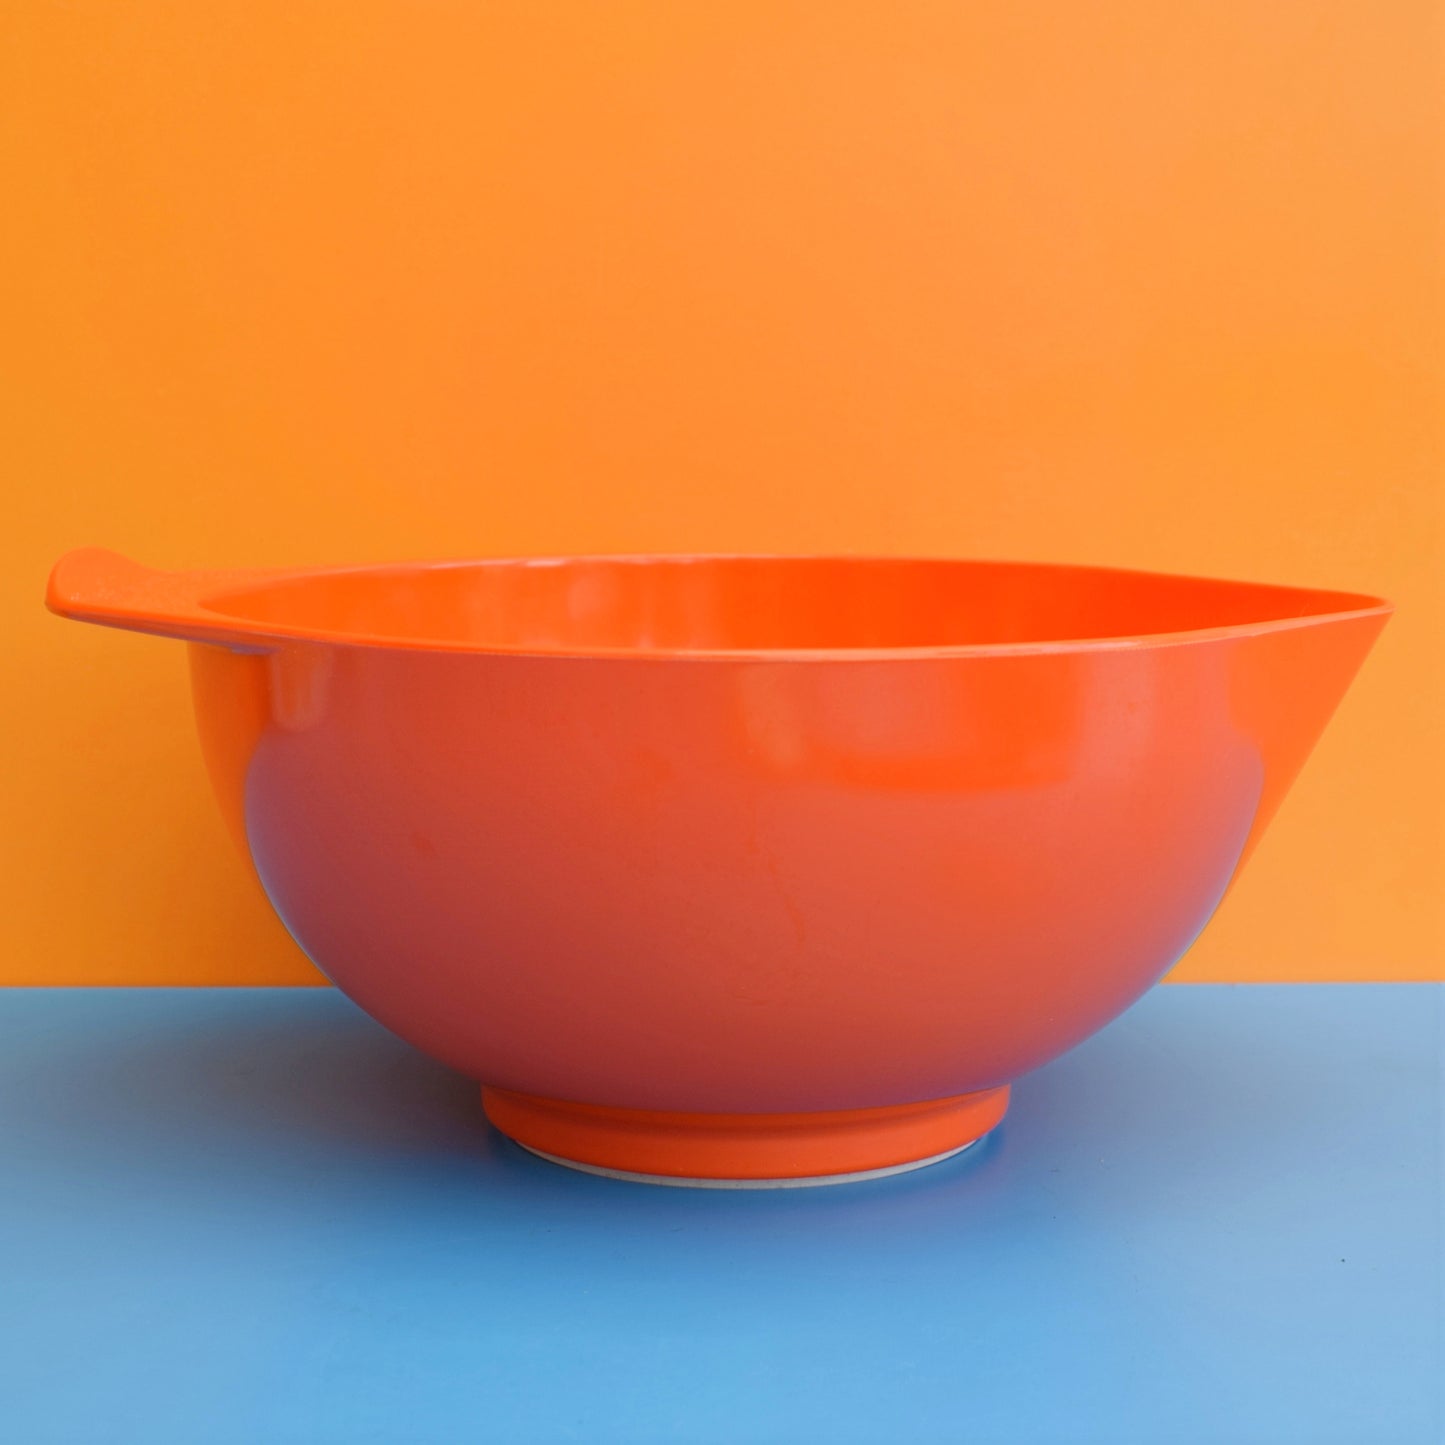 Vintage 1970s Addis Plastic Mixing Bowl - Orange